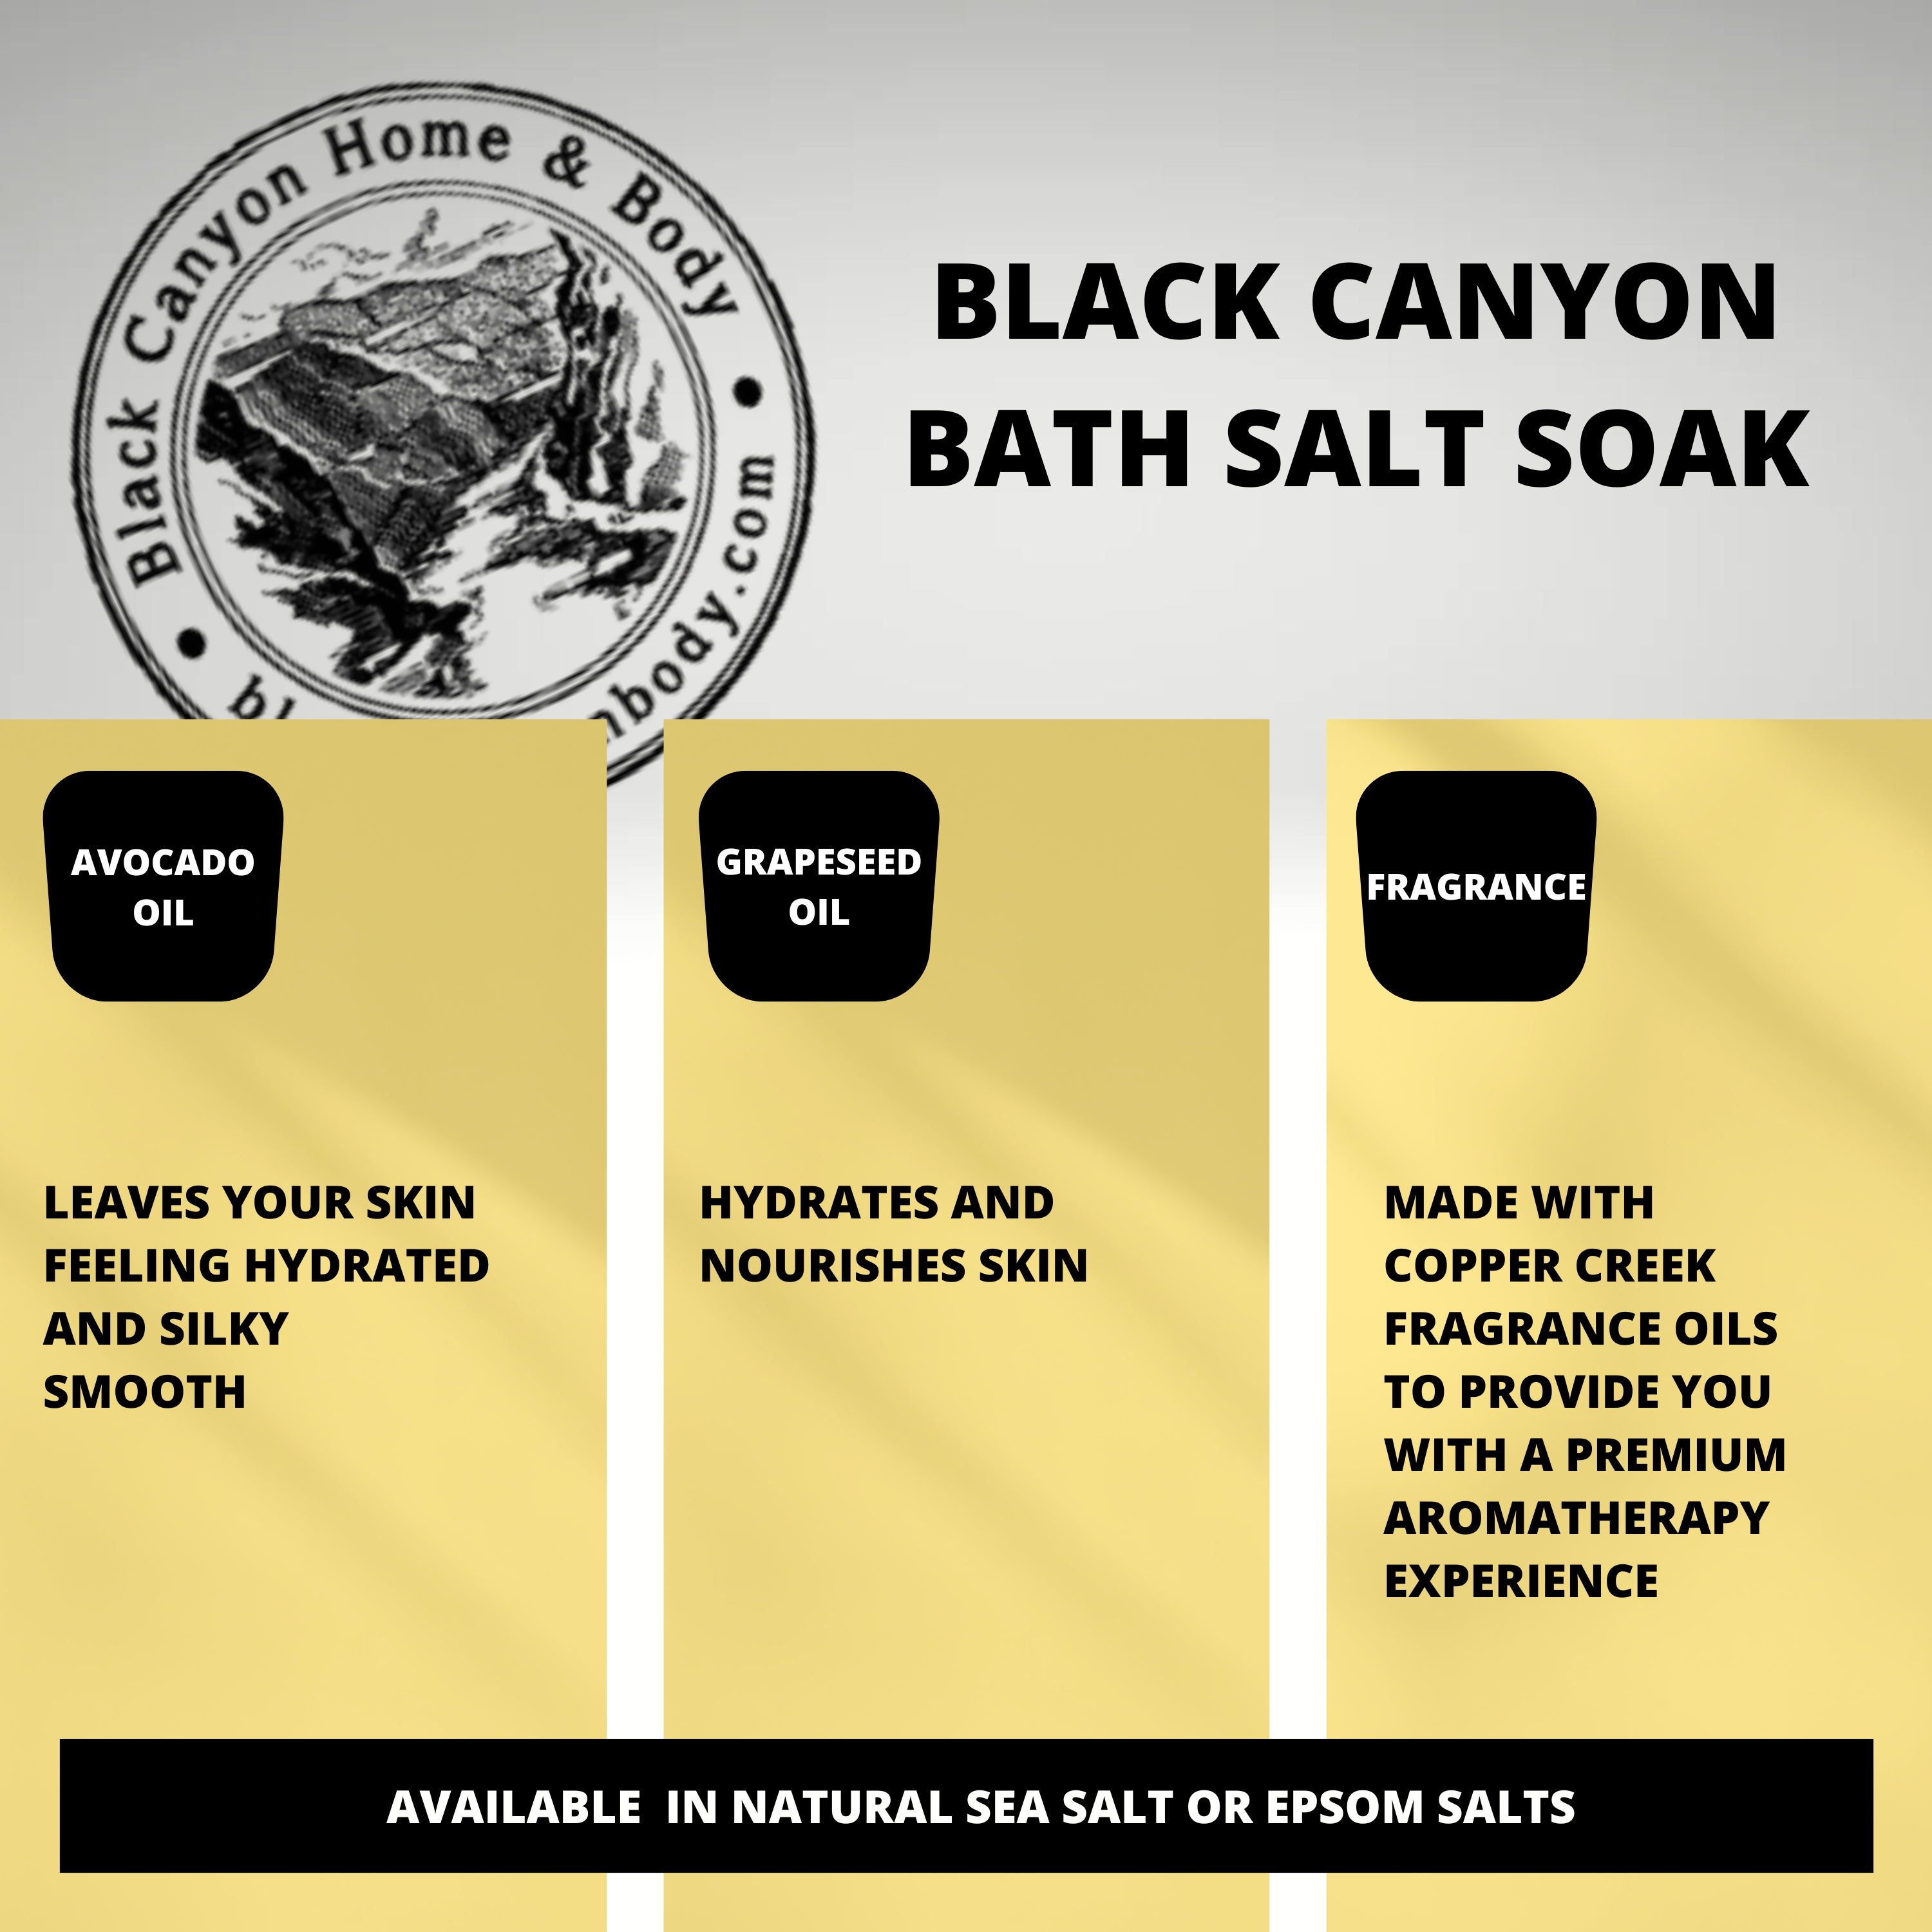 Black Canyon Cinnamon Sugar Cookie Scented Sea Salt Bath Soak